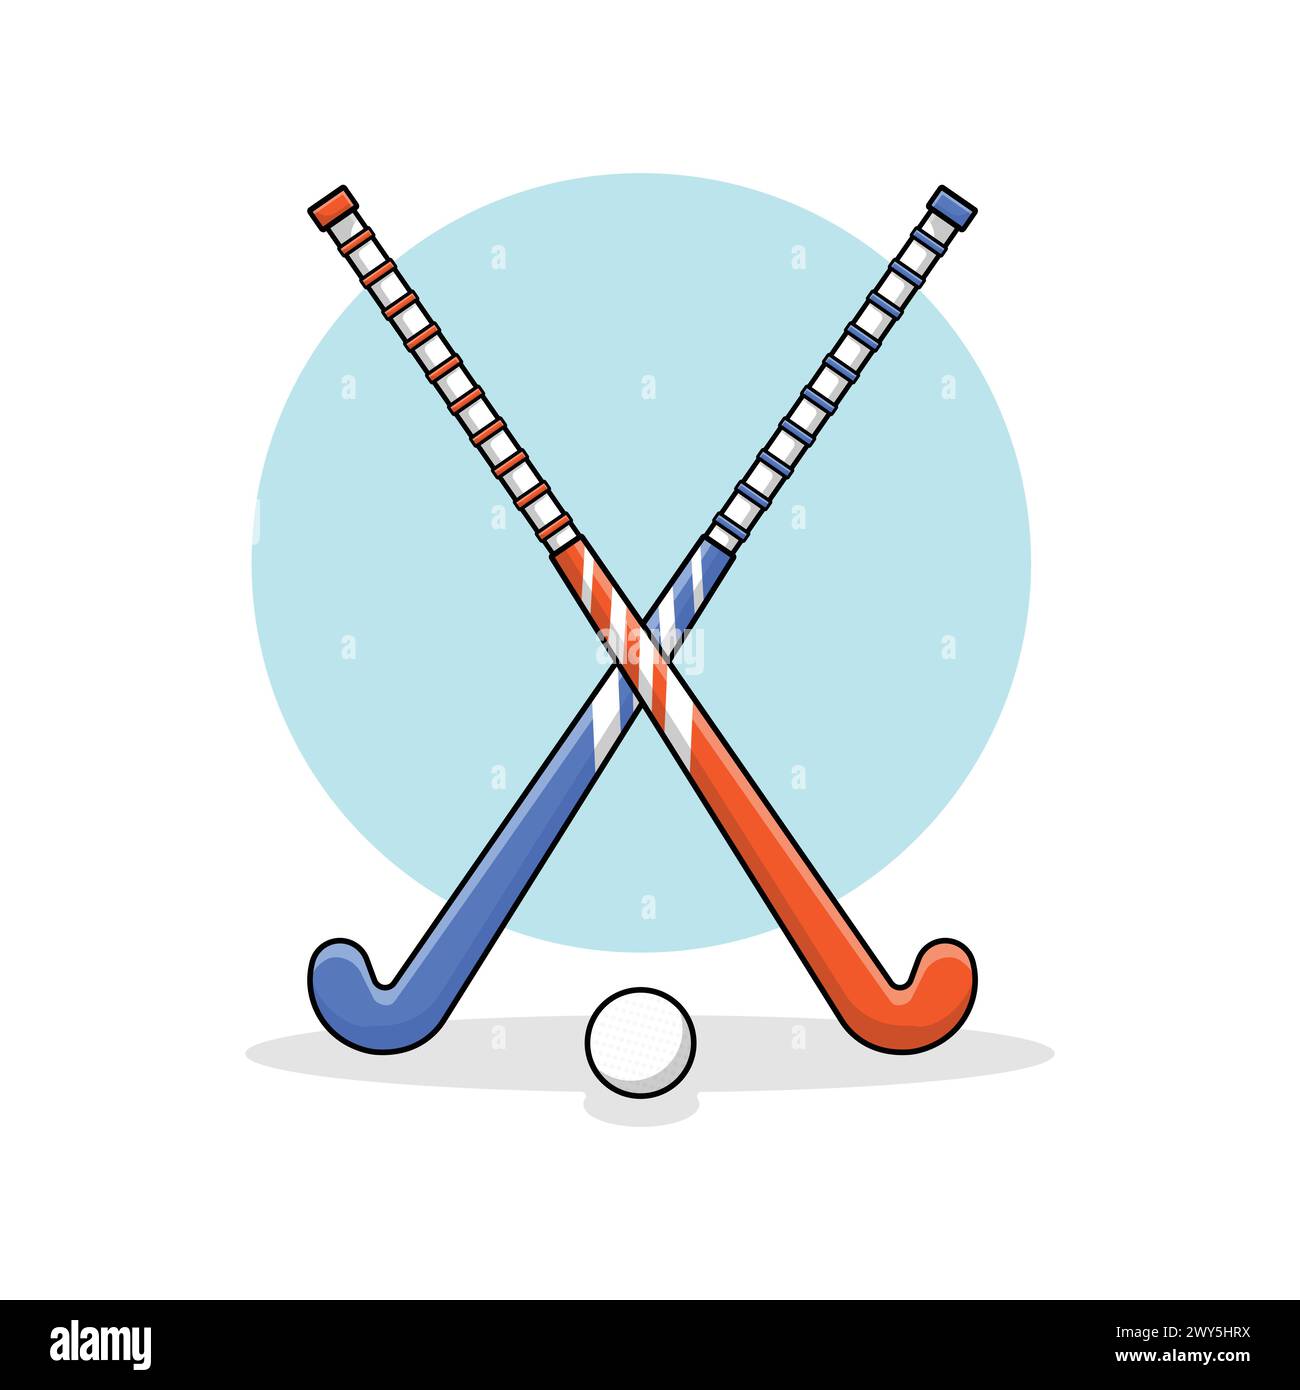 Hockey Stick and Hockey Puck Vector Illustration. Sports Hockey Concept Design Stock Vector